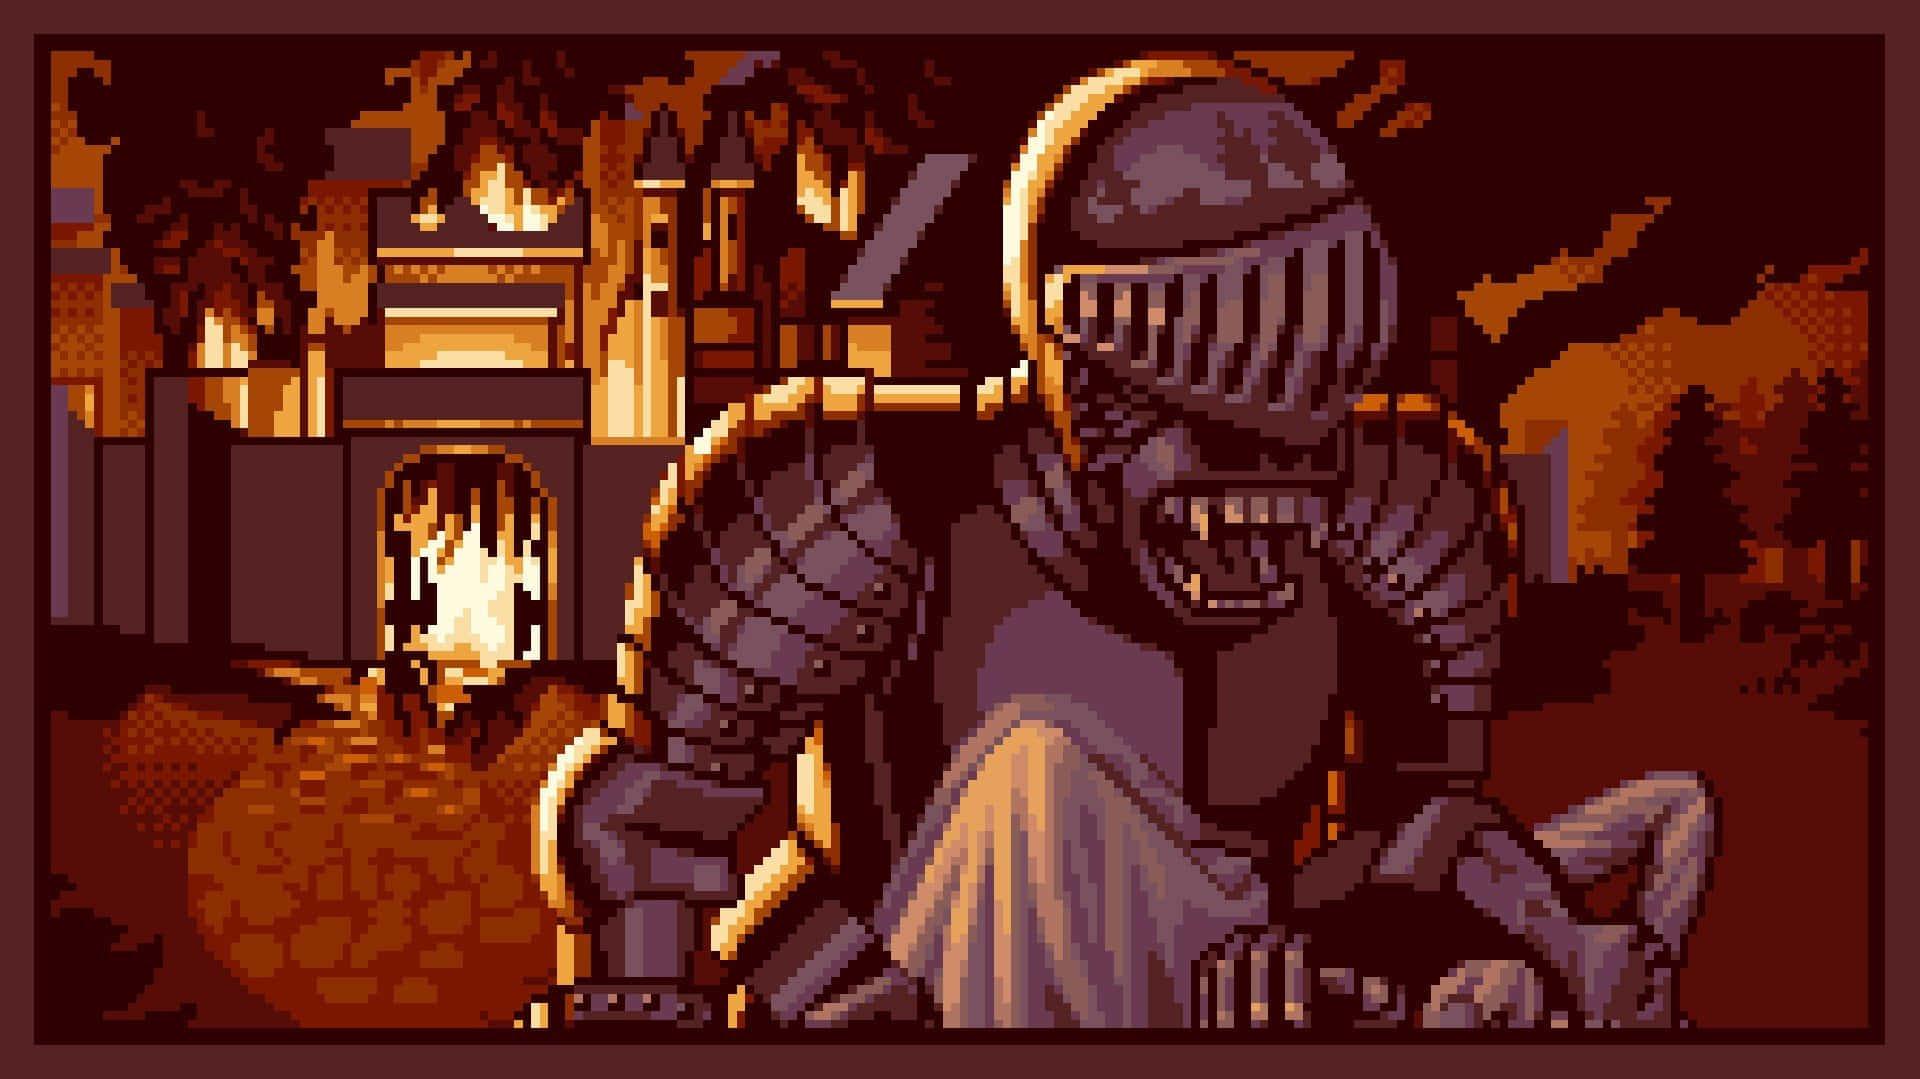 A Pixel Art Image Of Knight In Armor Wallpaper